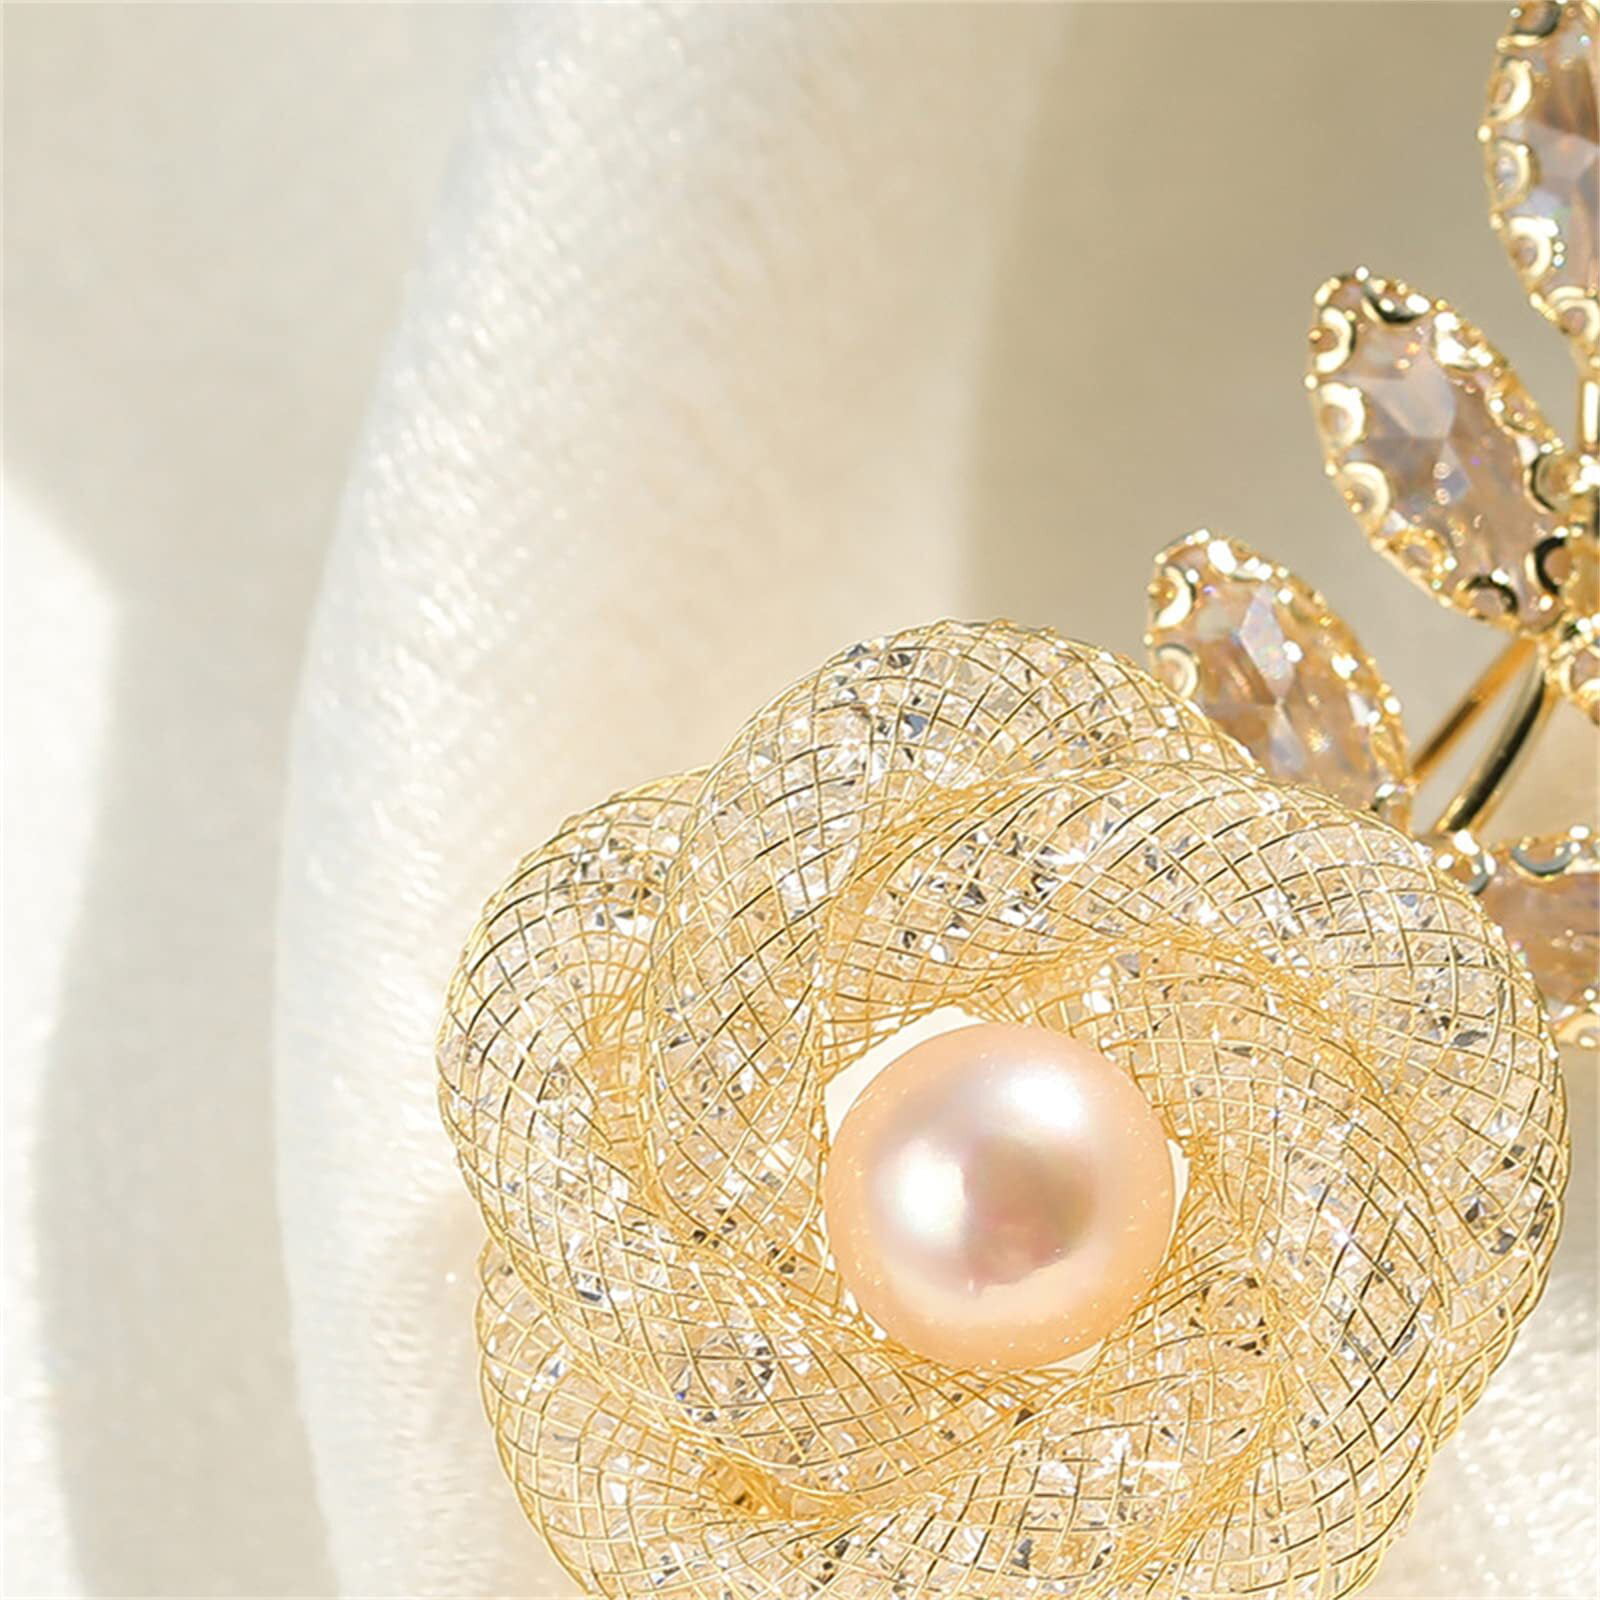 AUGTIGER Brooch Pins for Women Girls Fashion Flower Crystal Rhinestone Pearl Jewelry